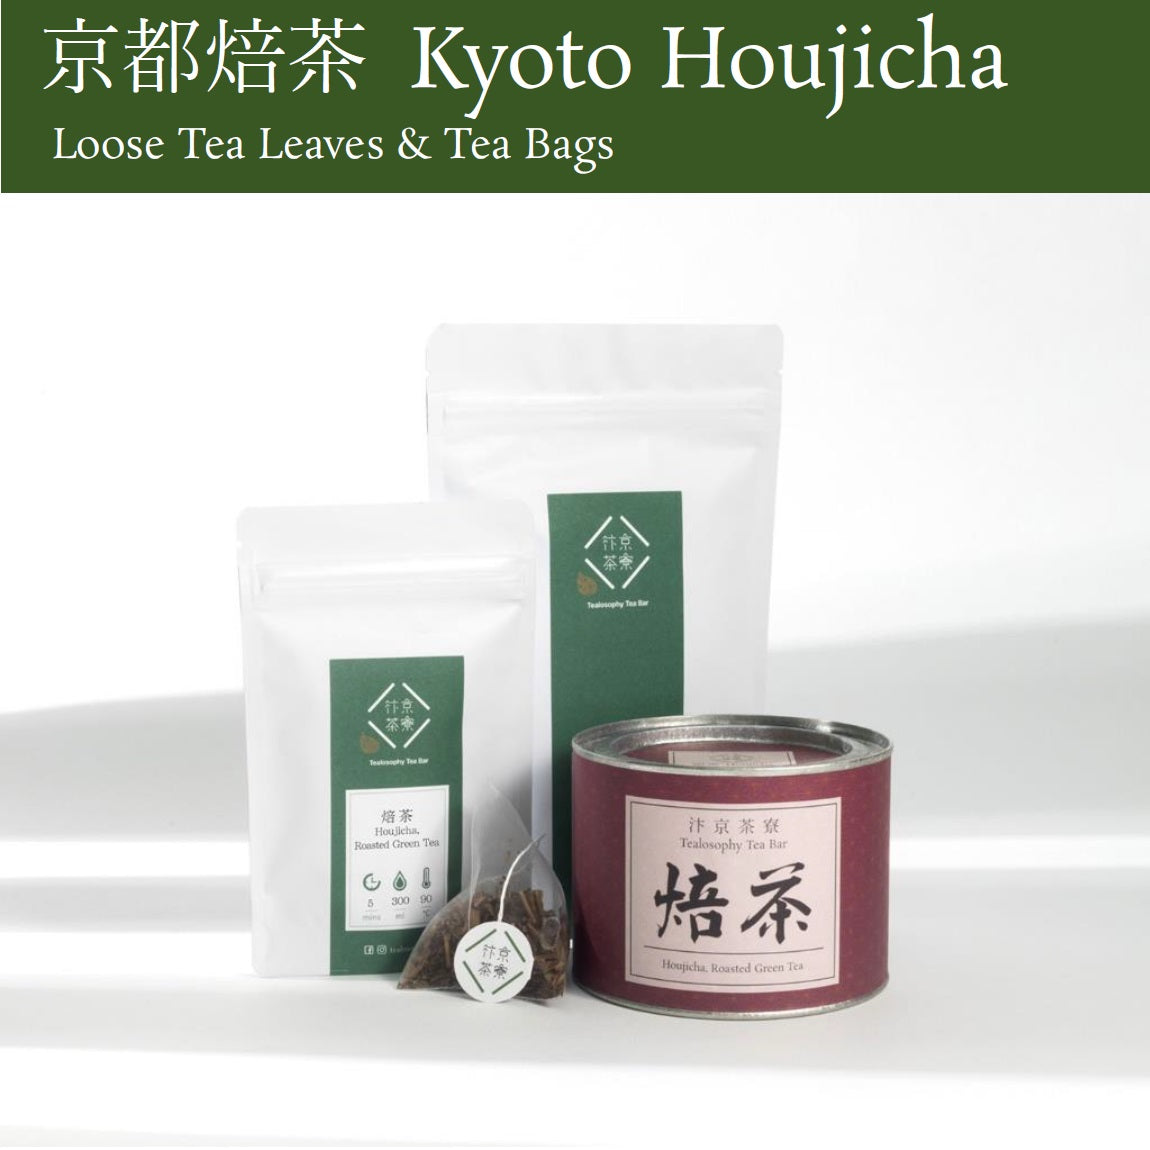 Kyoto Houjicha Roasted Green Tea